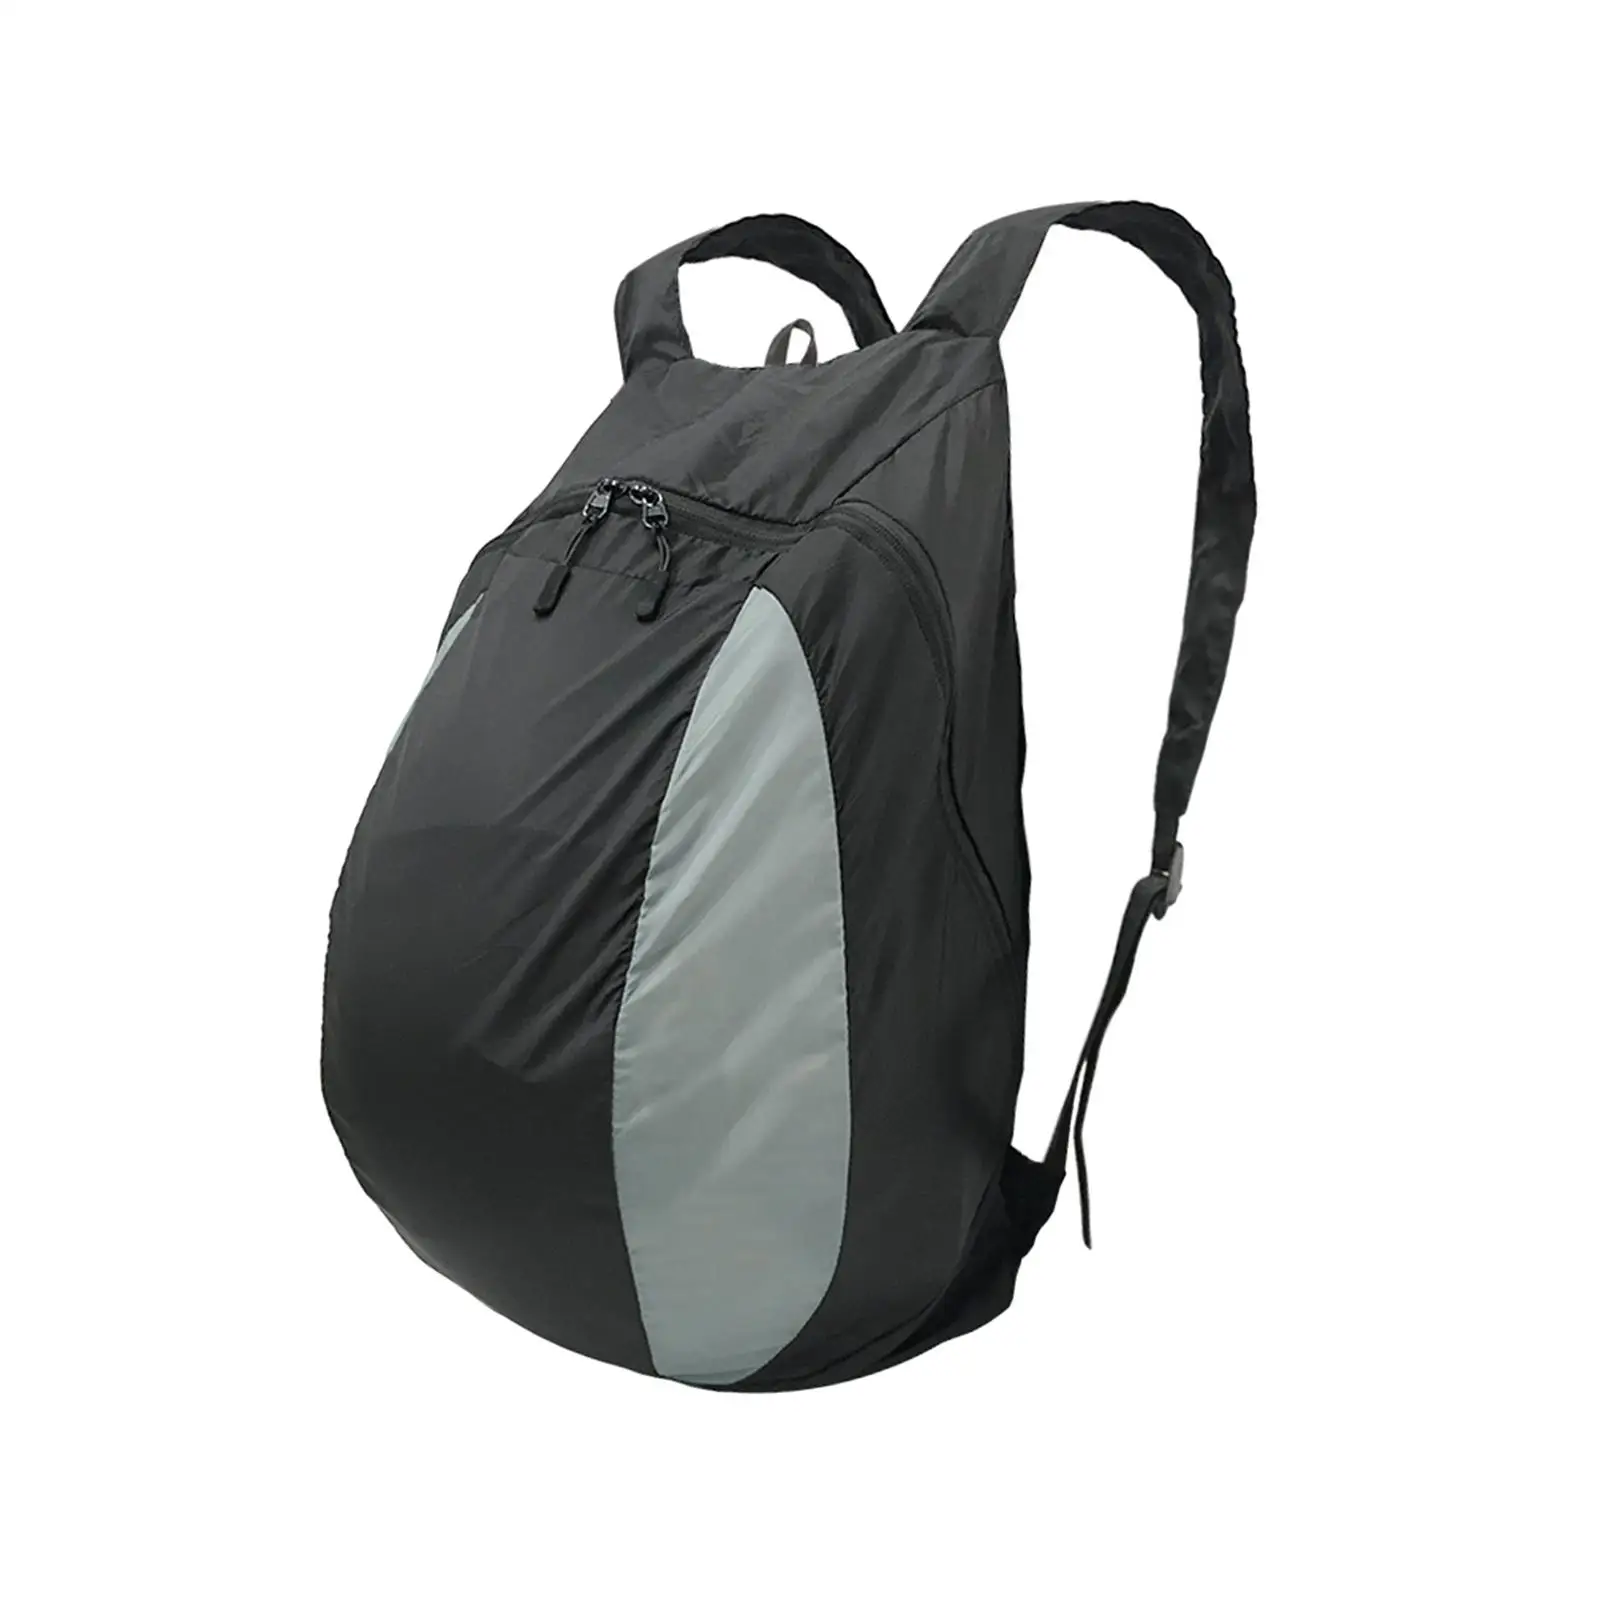 Basketball Backpack Bag Tear Resistant Lightweight Unisex Soccer Storage Bag Holder for Travel Outdoor Activities Sports